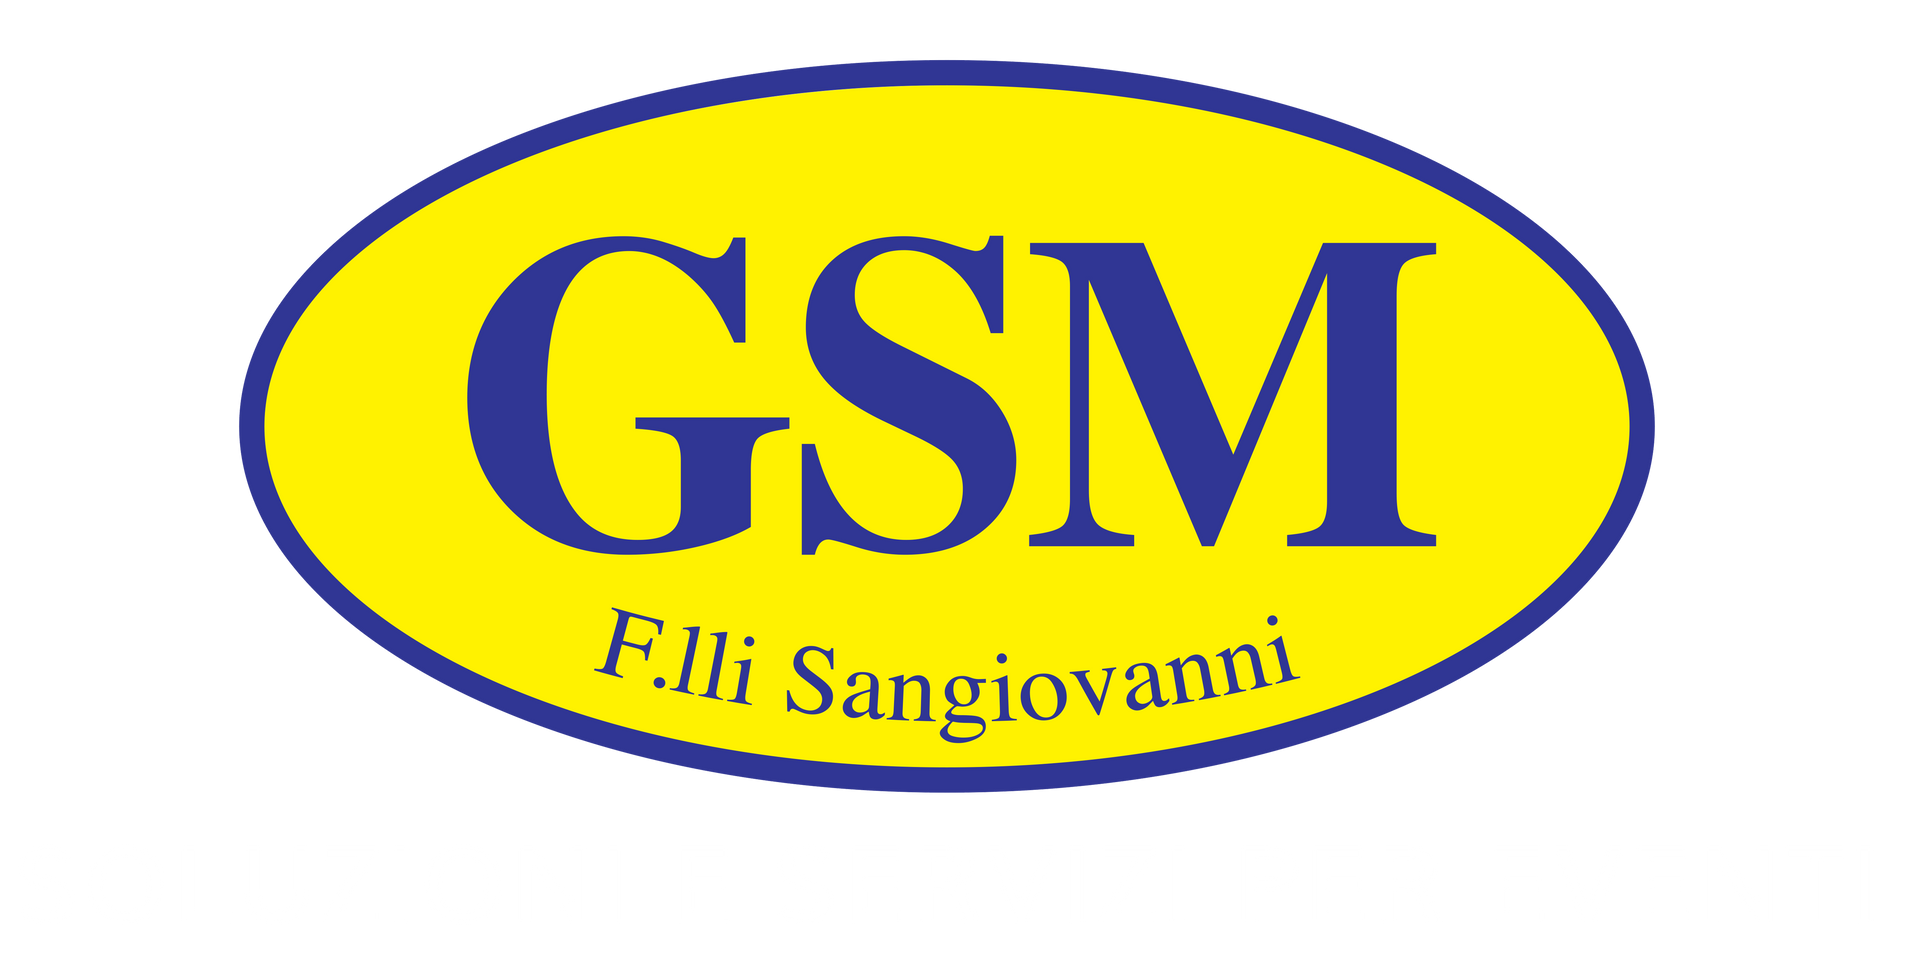 GRUPPO GSM F.LLI SANGIOVANNI-LOGO